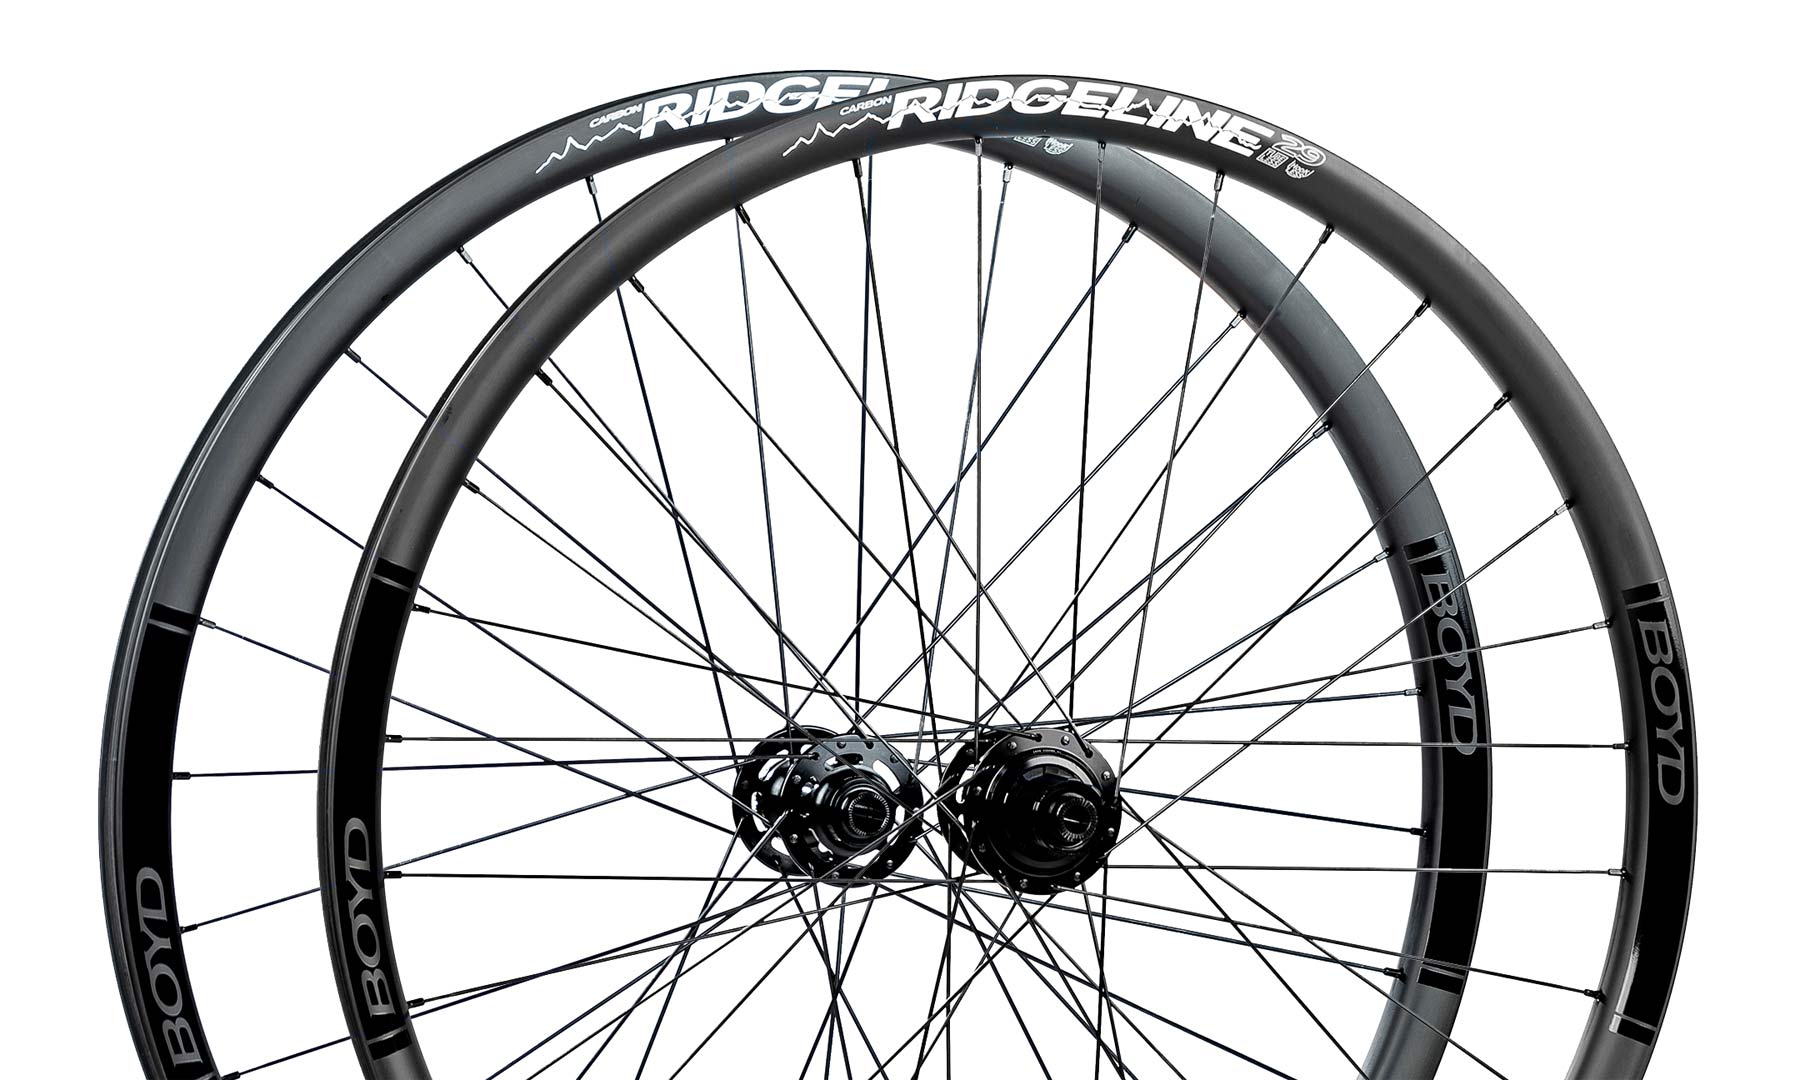 2020 Boyd Ridgeline MTB wheels, 30mm wide internal hookless tubeless 27.5" 29er carbon enduro trail cross-country mountain bike wheelset